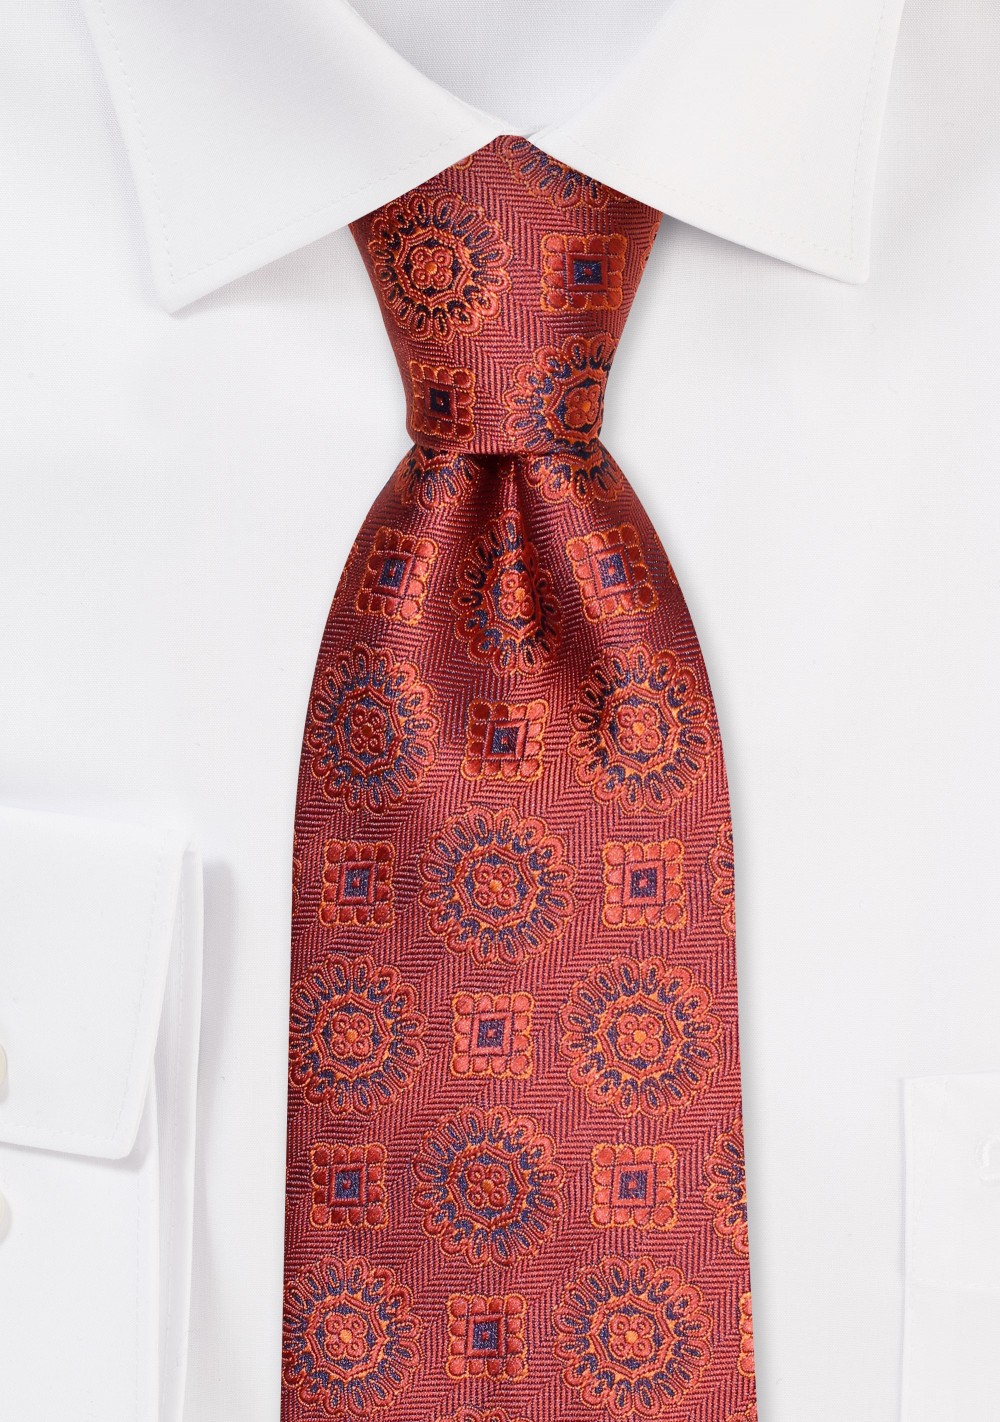 Medallion Designer Tie in Cinnamon